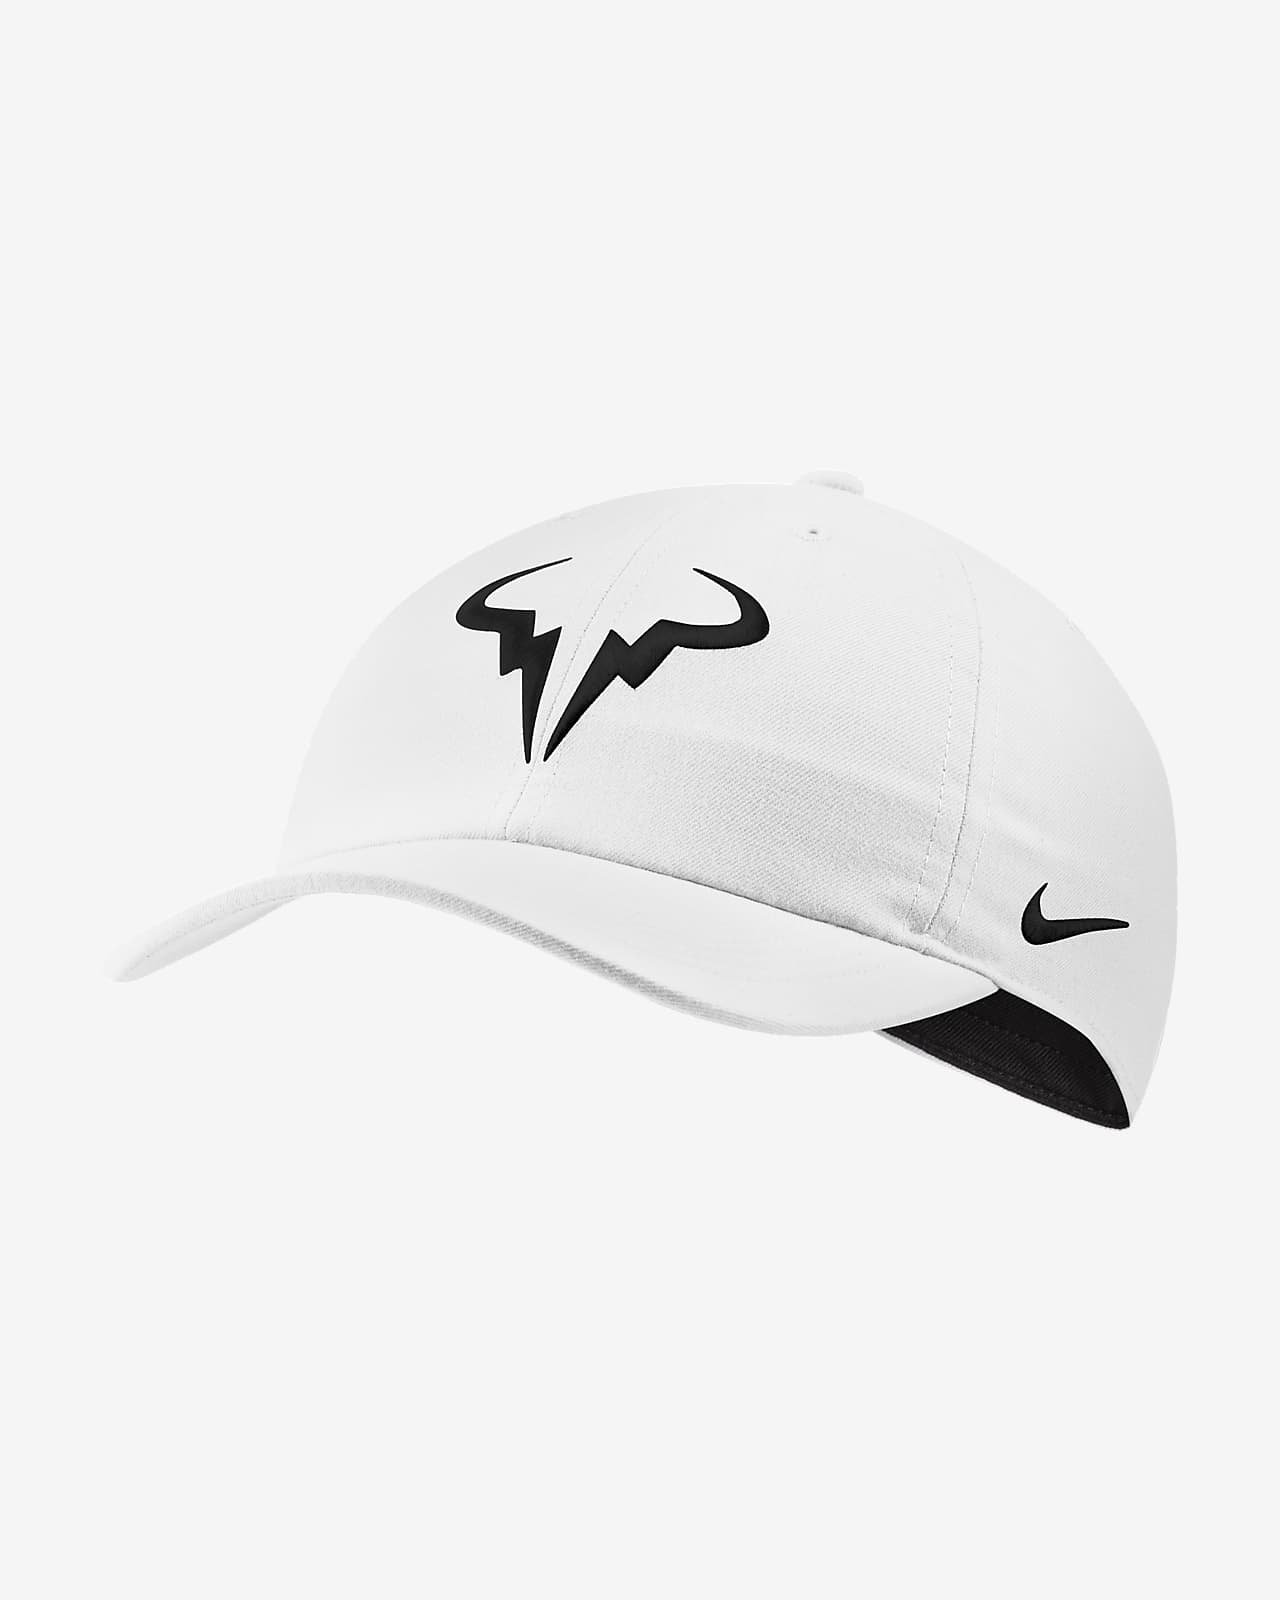 NikeCourt Rafa Heritage86 Tennis Hat. BG